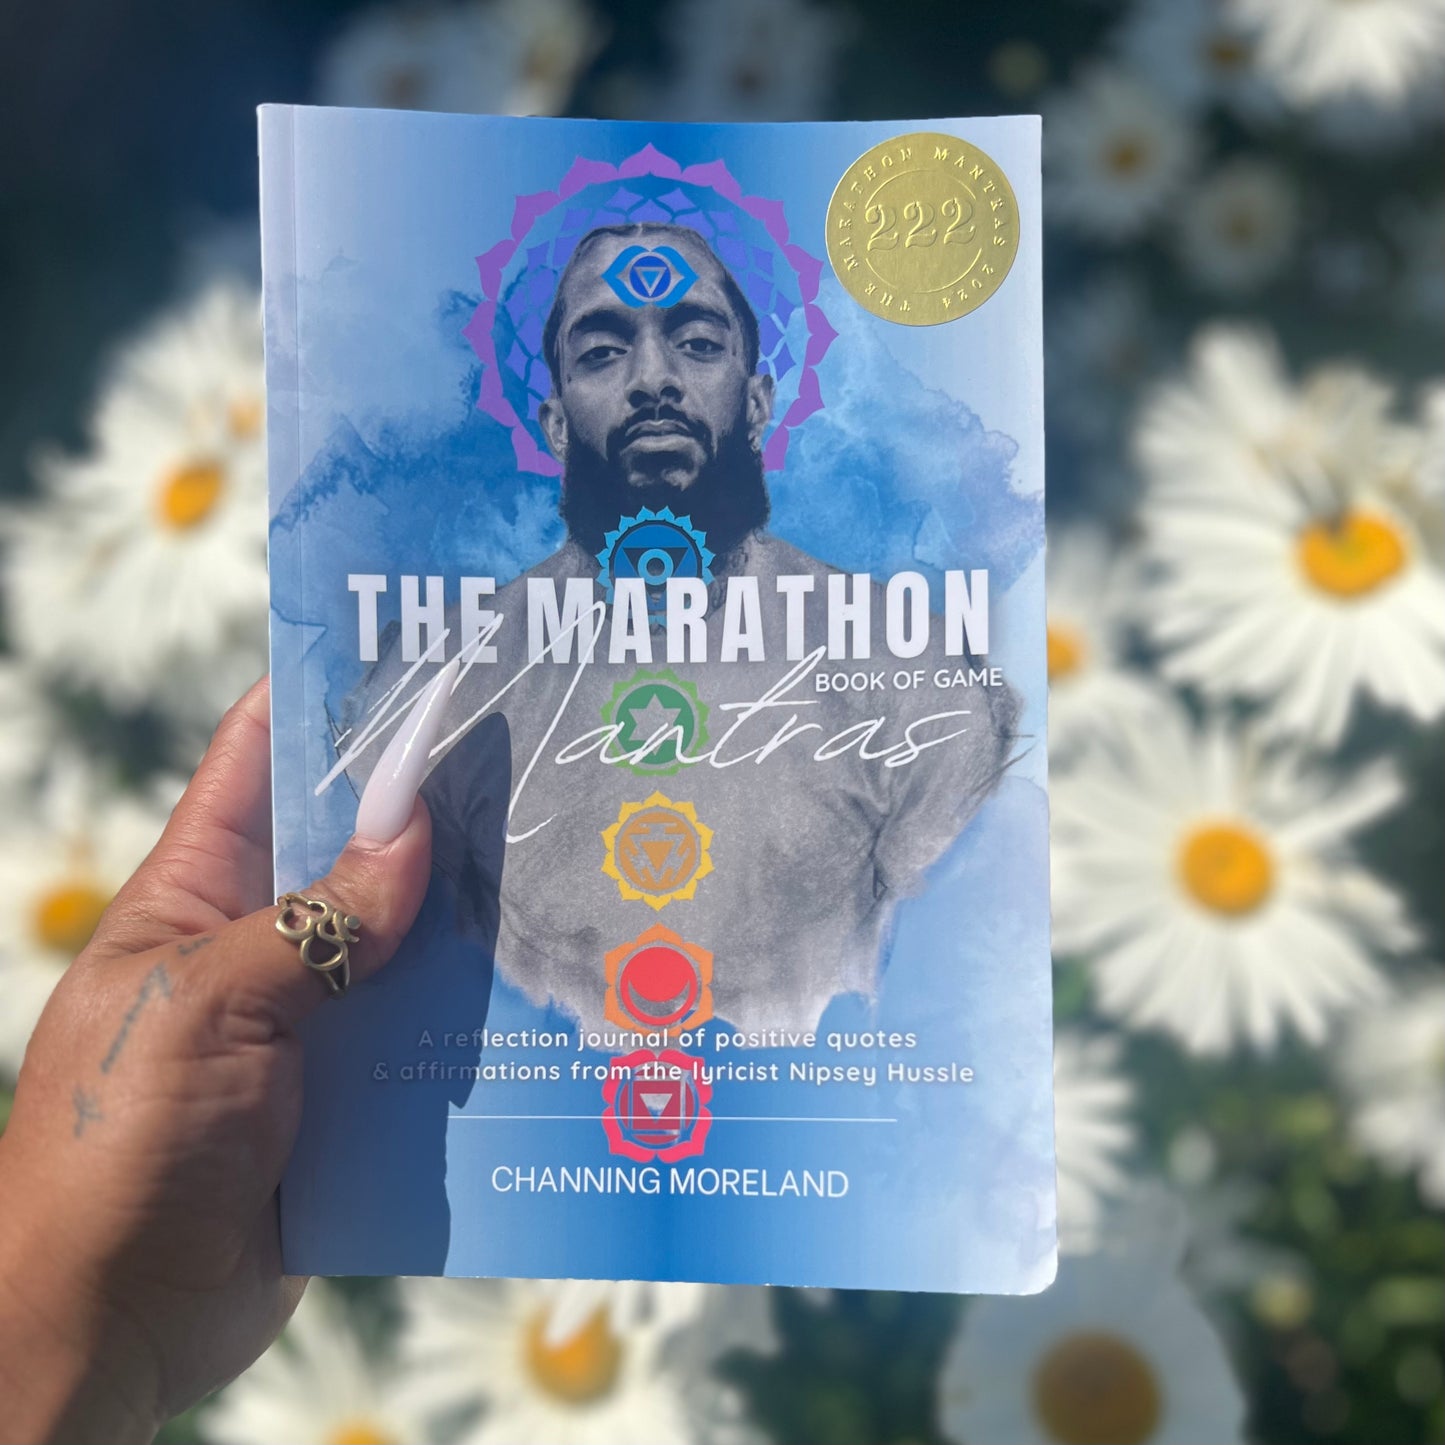 The Marathon Mantras book